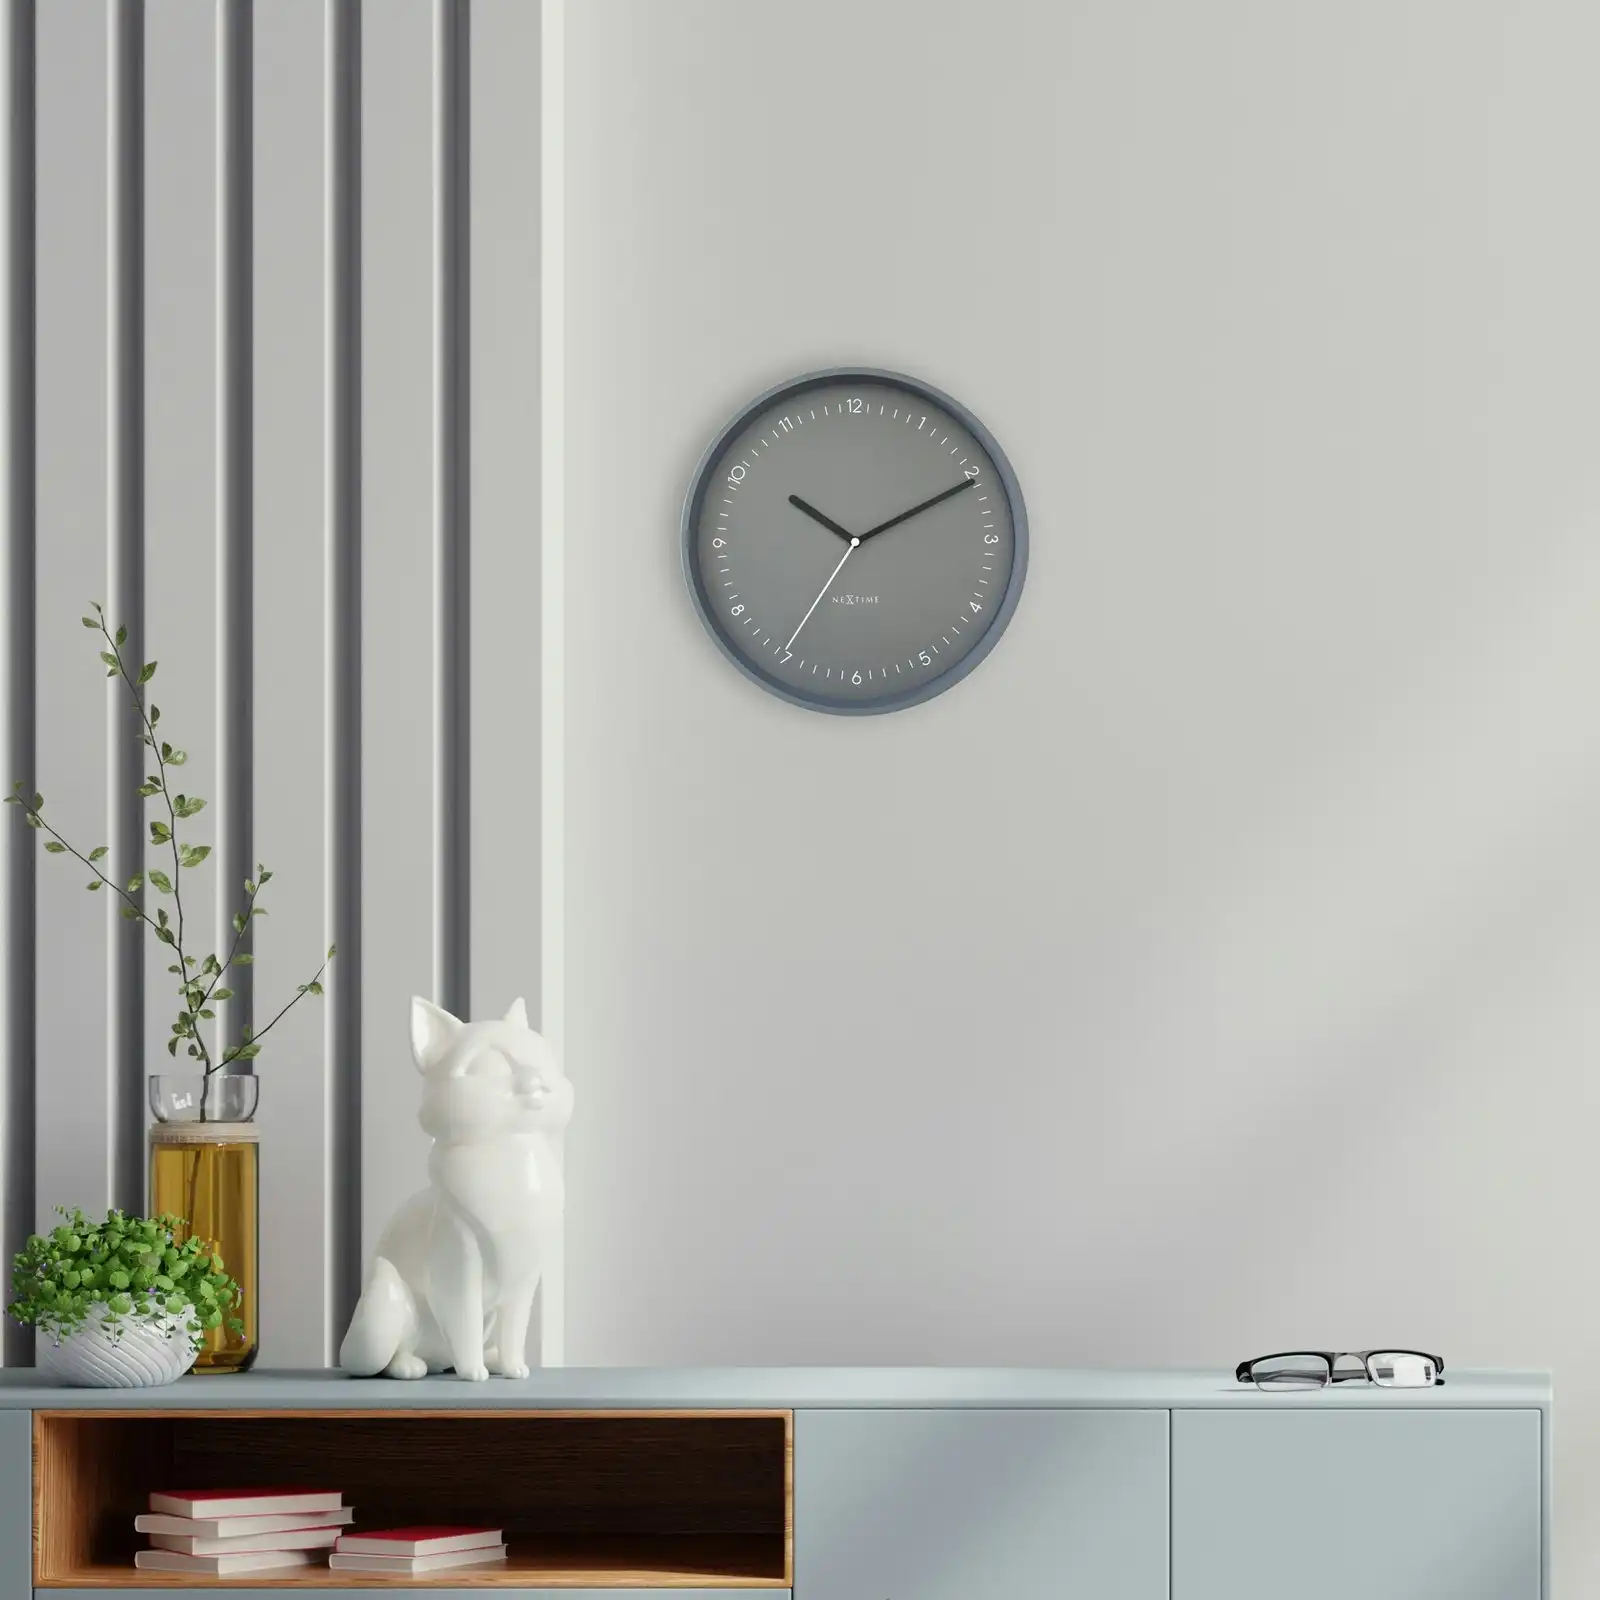 NeXtime Berlin Glass Analogue 30cm Hanging Wall Clock Decor Silent Sweep Grey